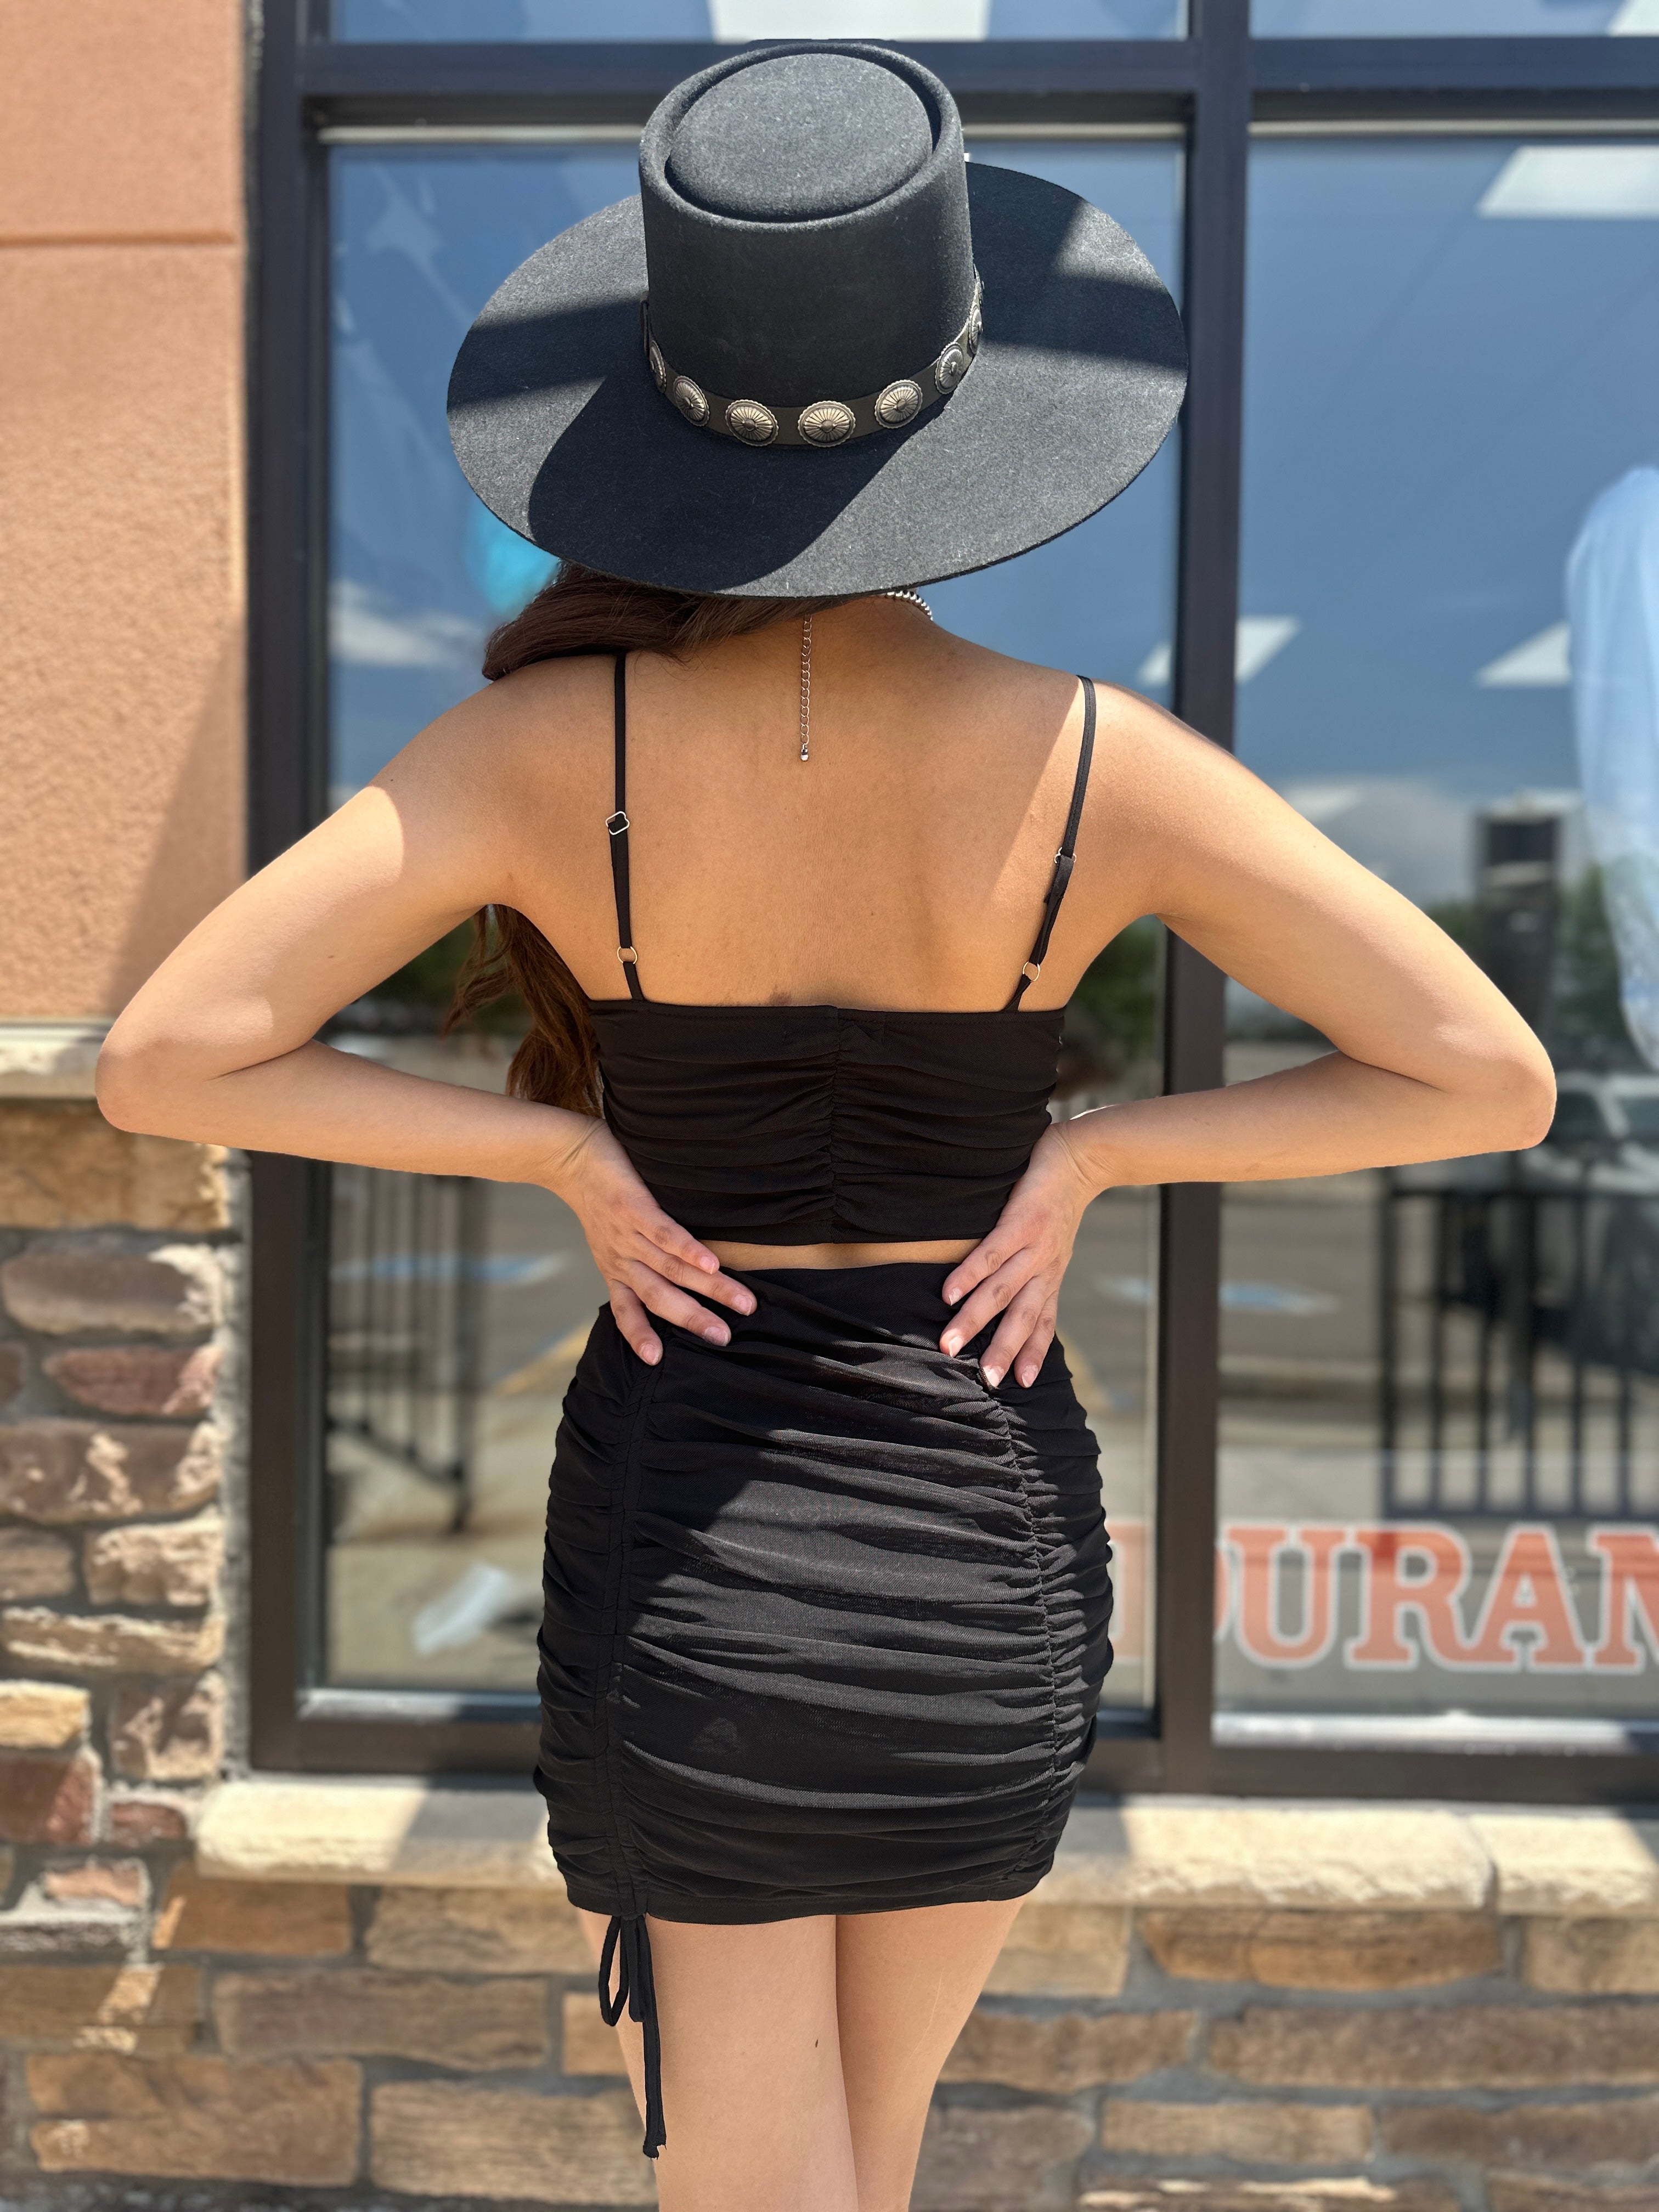 Sarahi Black Fringe Skirt – Moreno's Wear